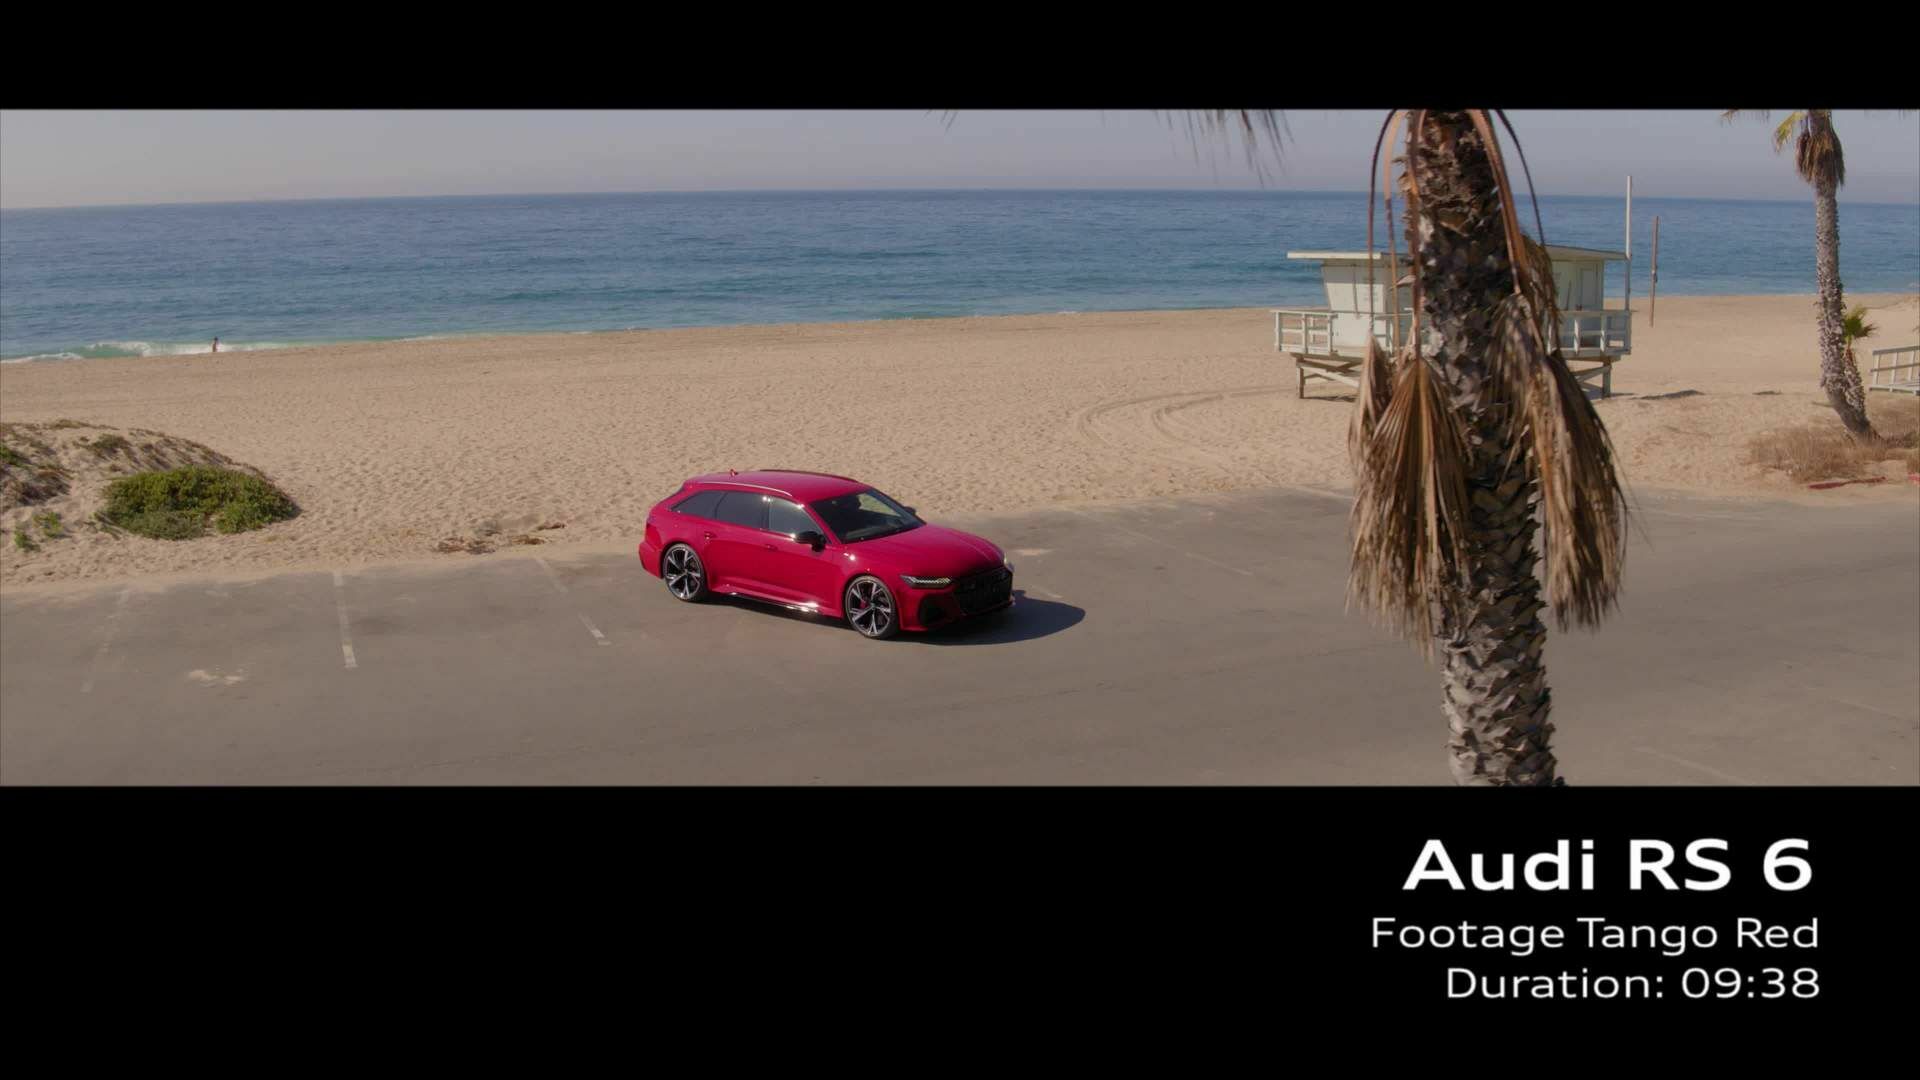 Audi RS 6 on location Tangorot (Footage)